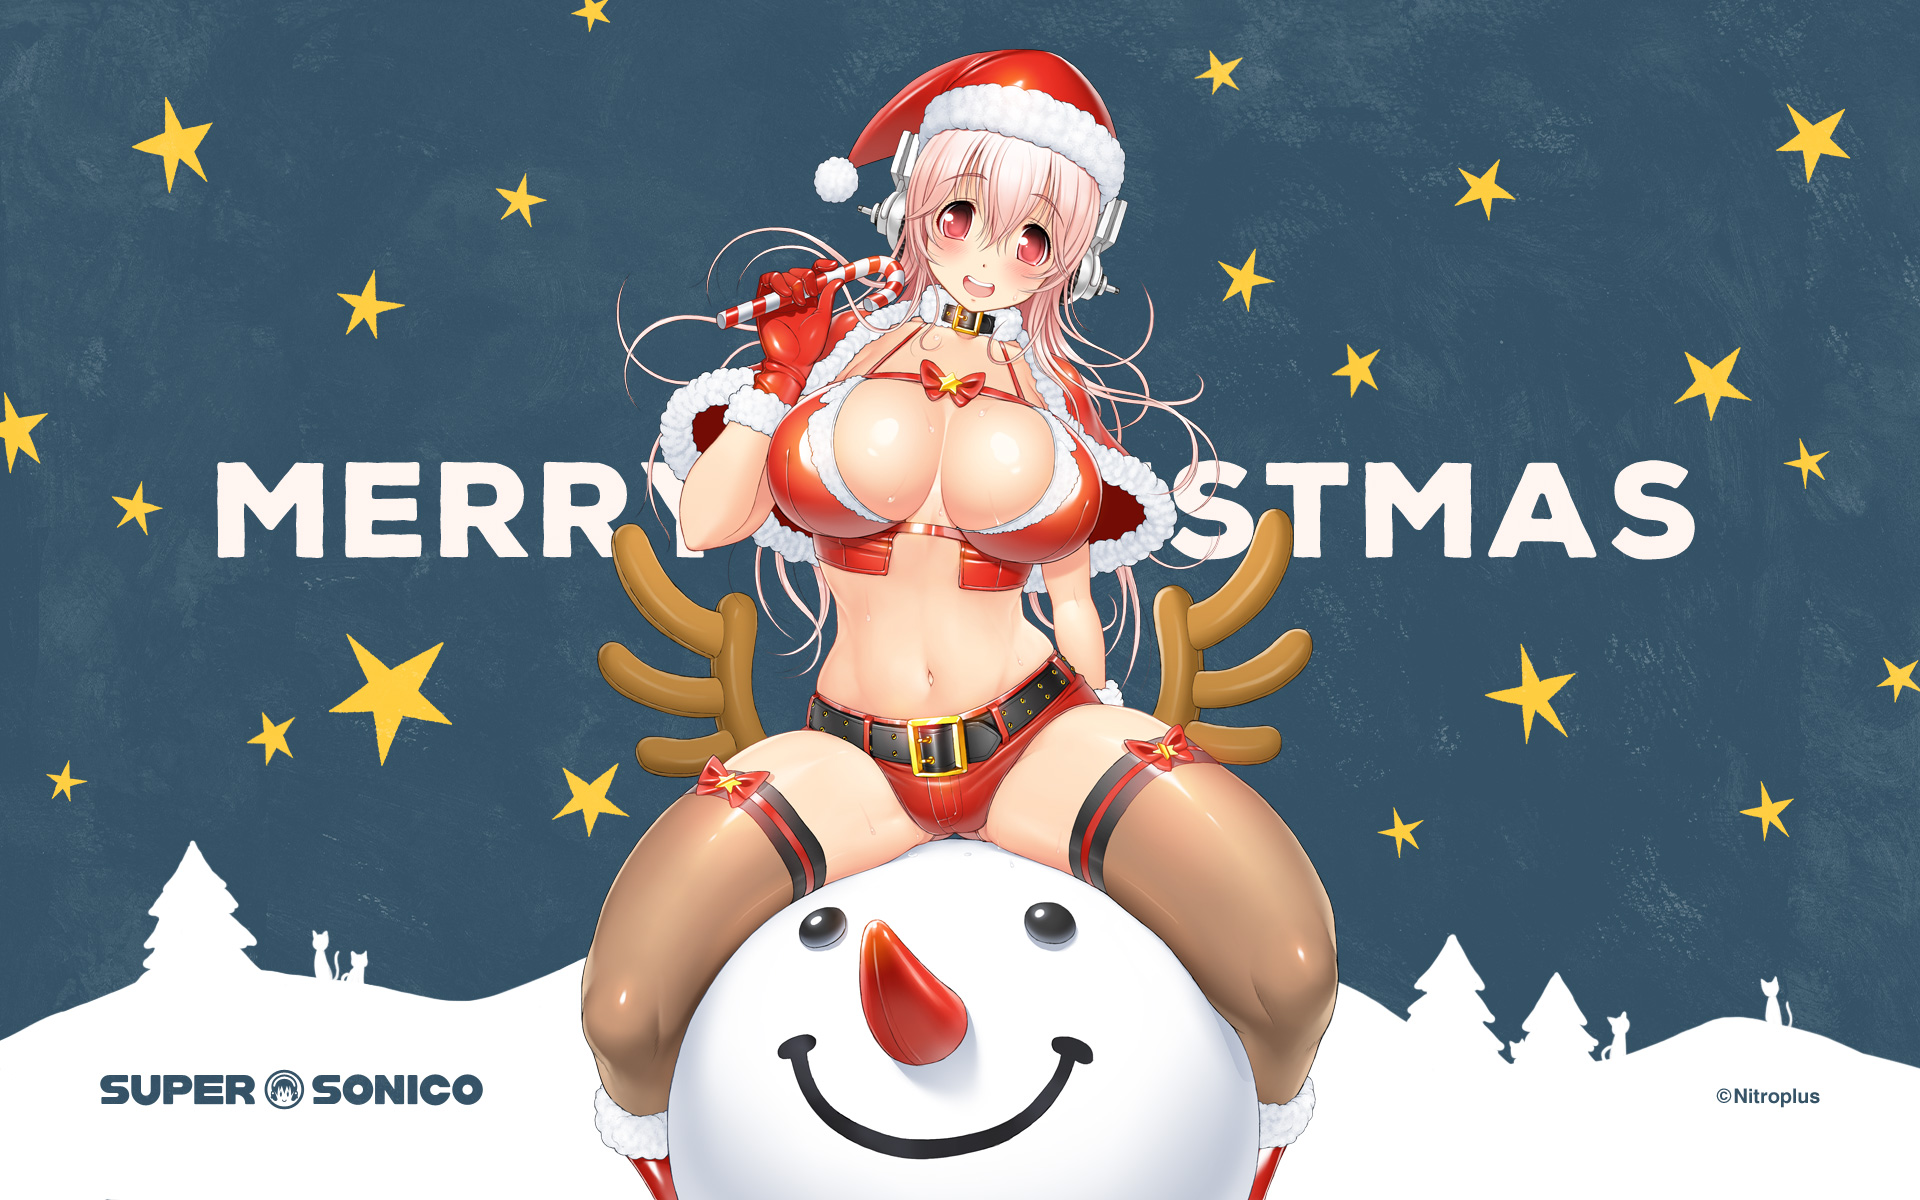 Nitroplus Mascot Gets An Erotic Christmas Wallpaper Illustration Nsfw Haruhichan